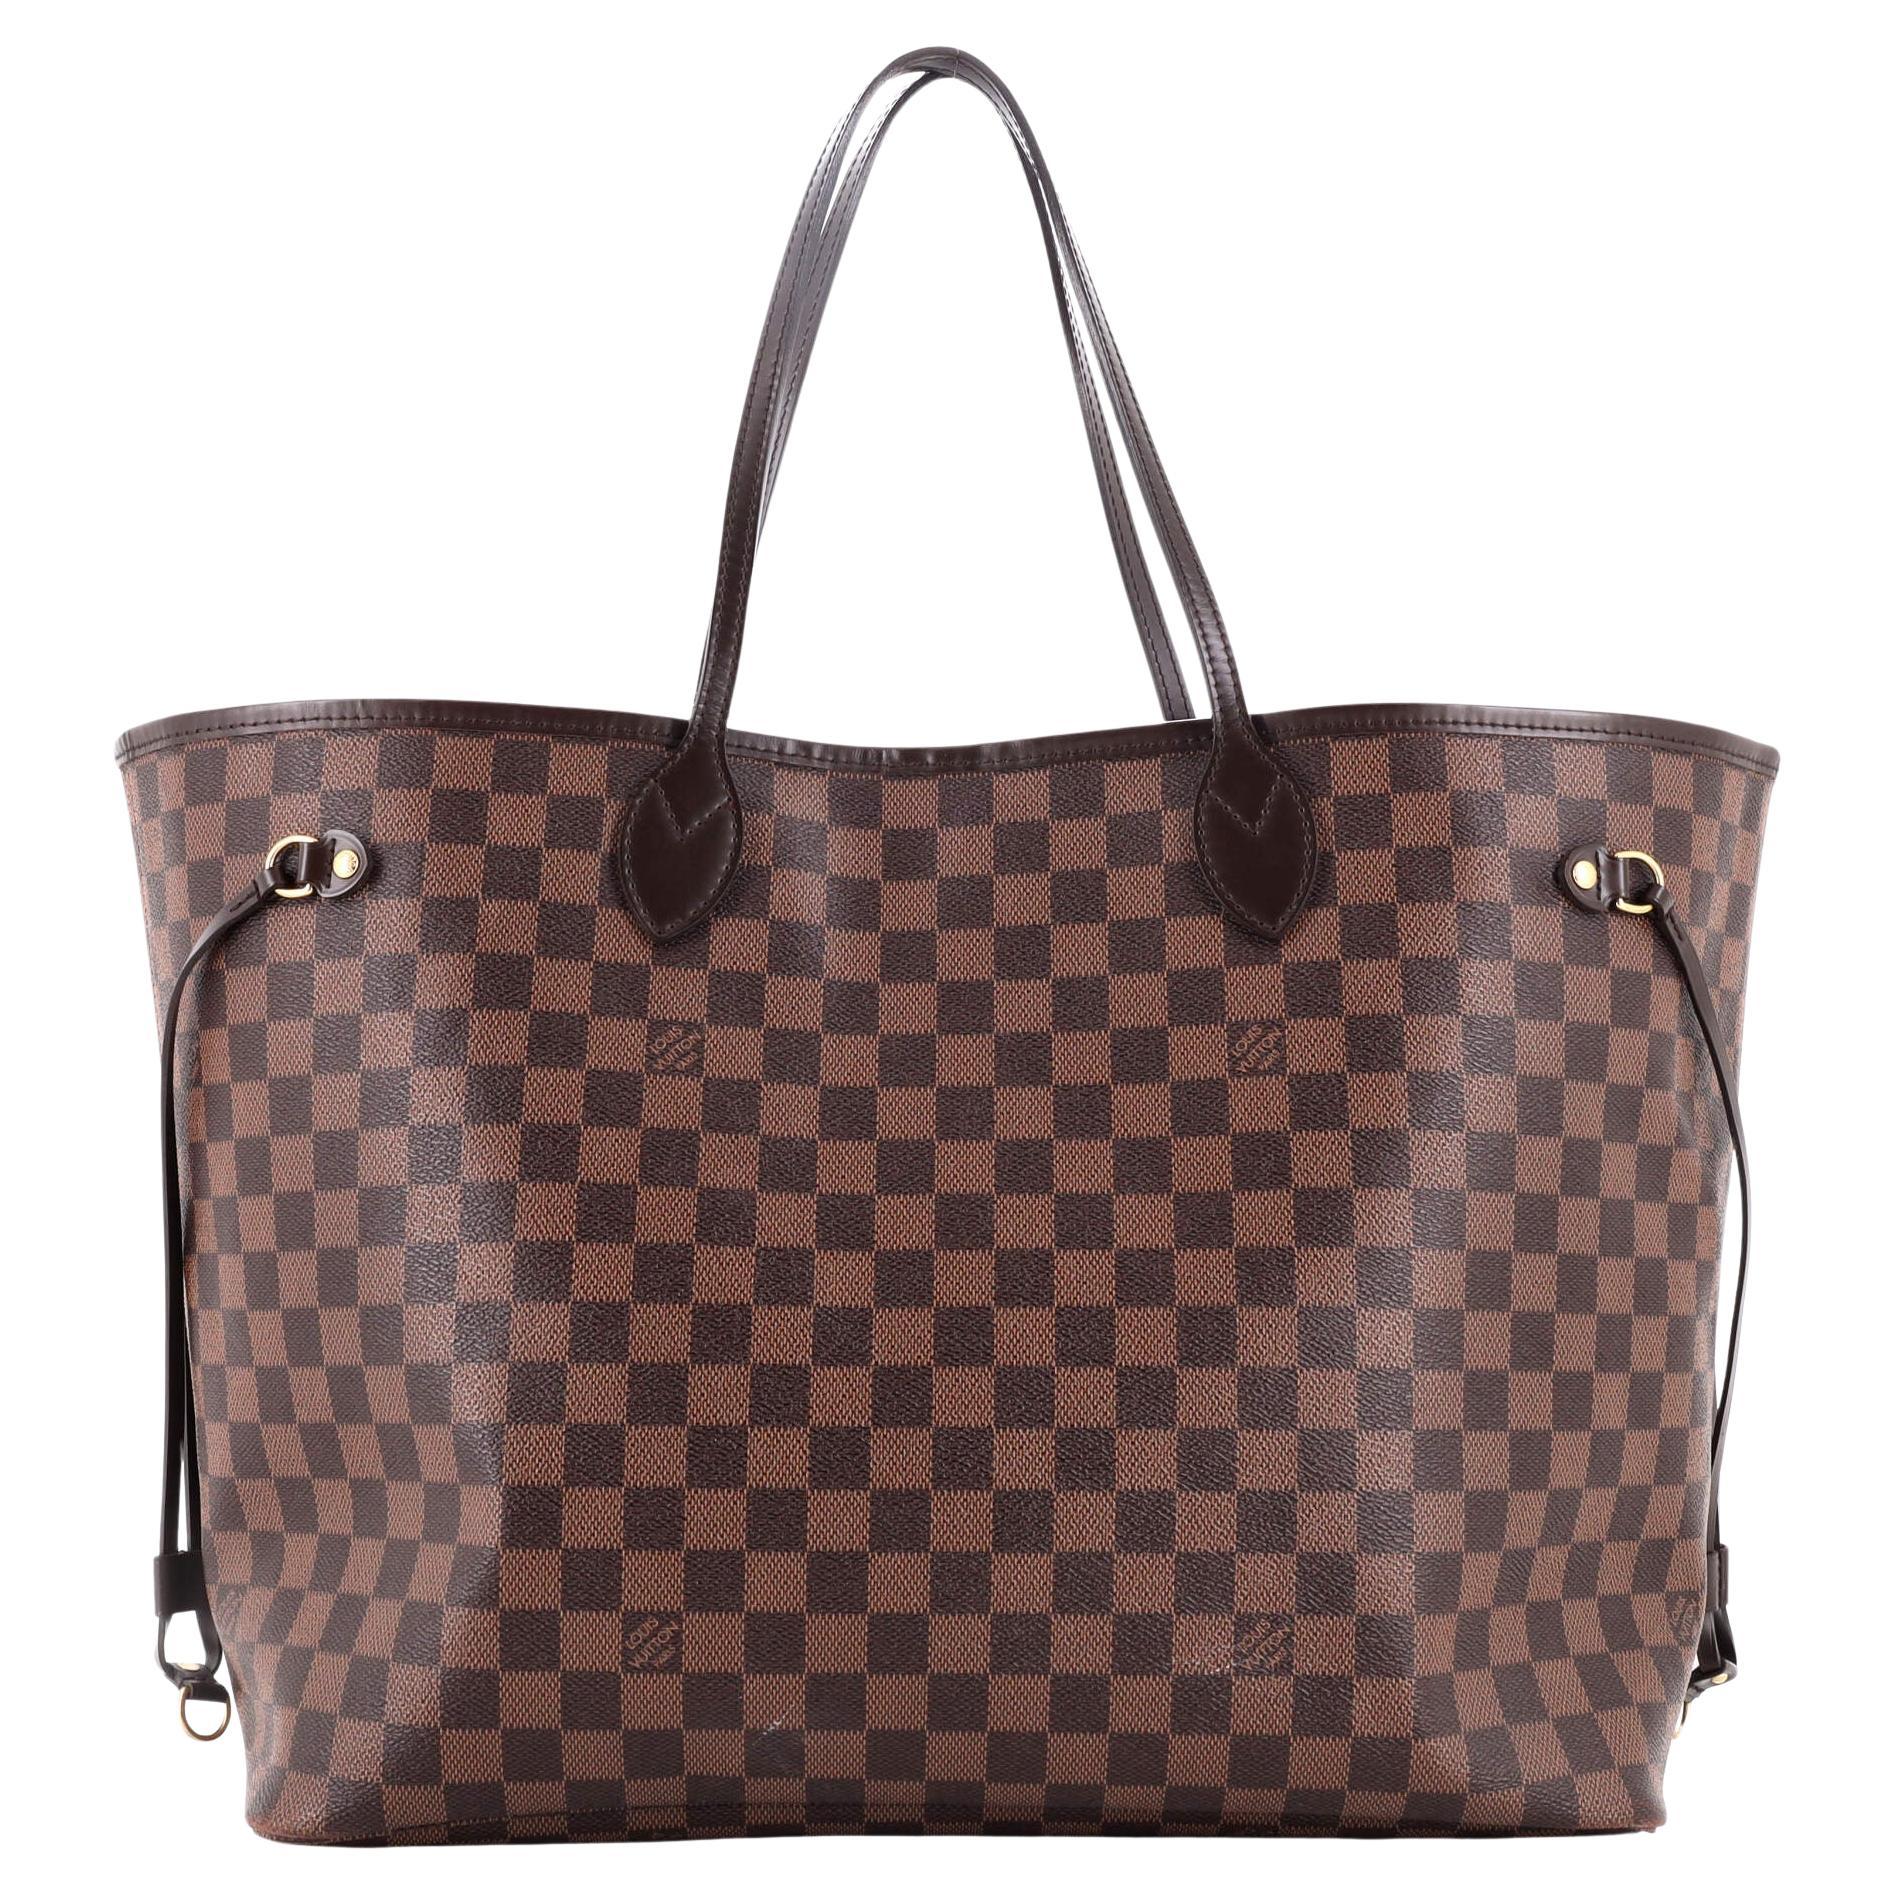 Do Louis Vuitton repair bags? - Questions & Answers